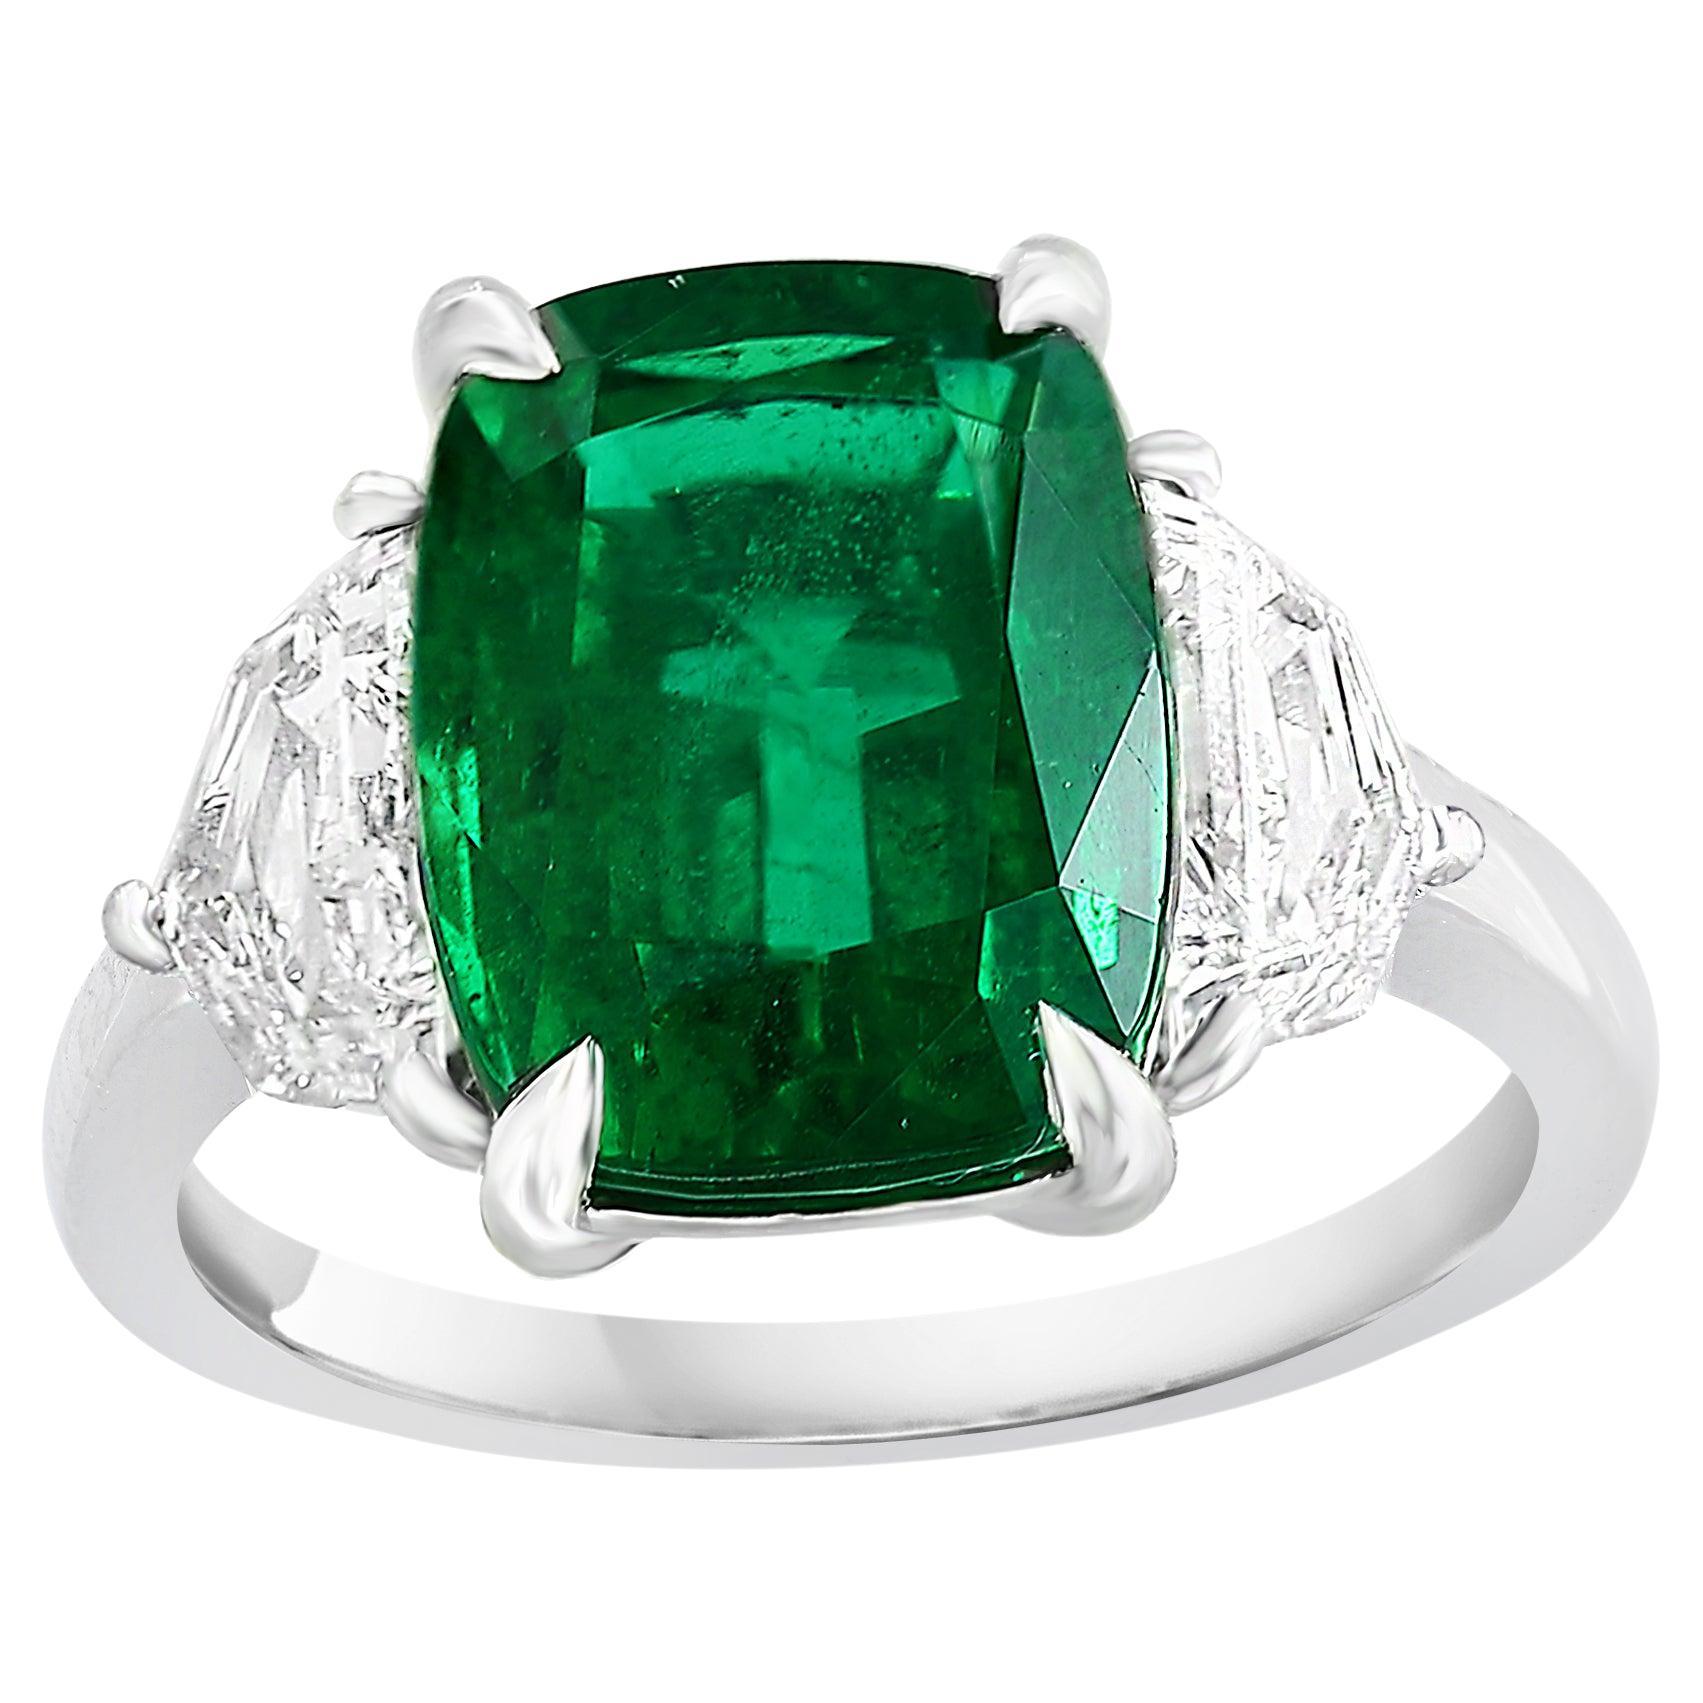 Certified 3.49 Carat Cushion Cut Emerald & Diamond Engagement Ring in Platinum